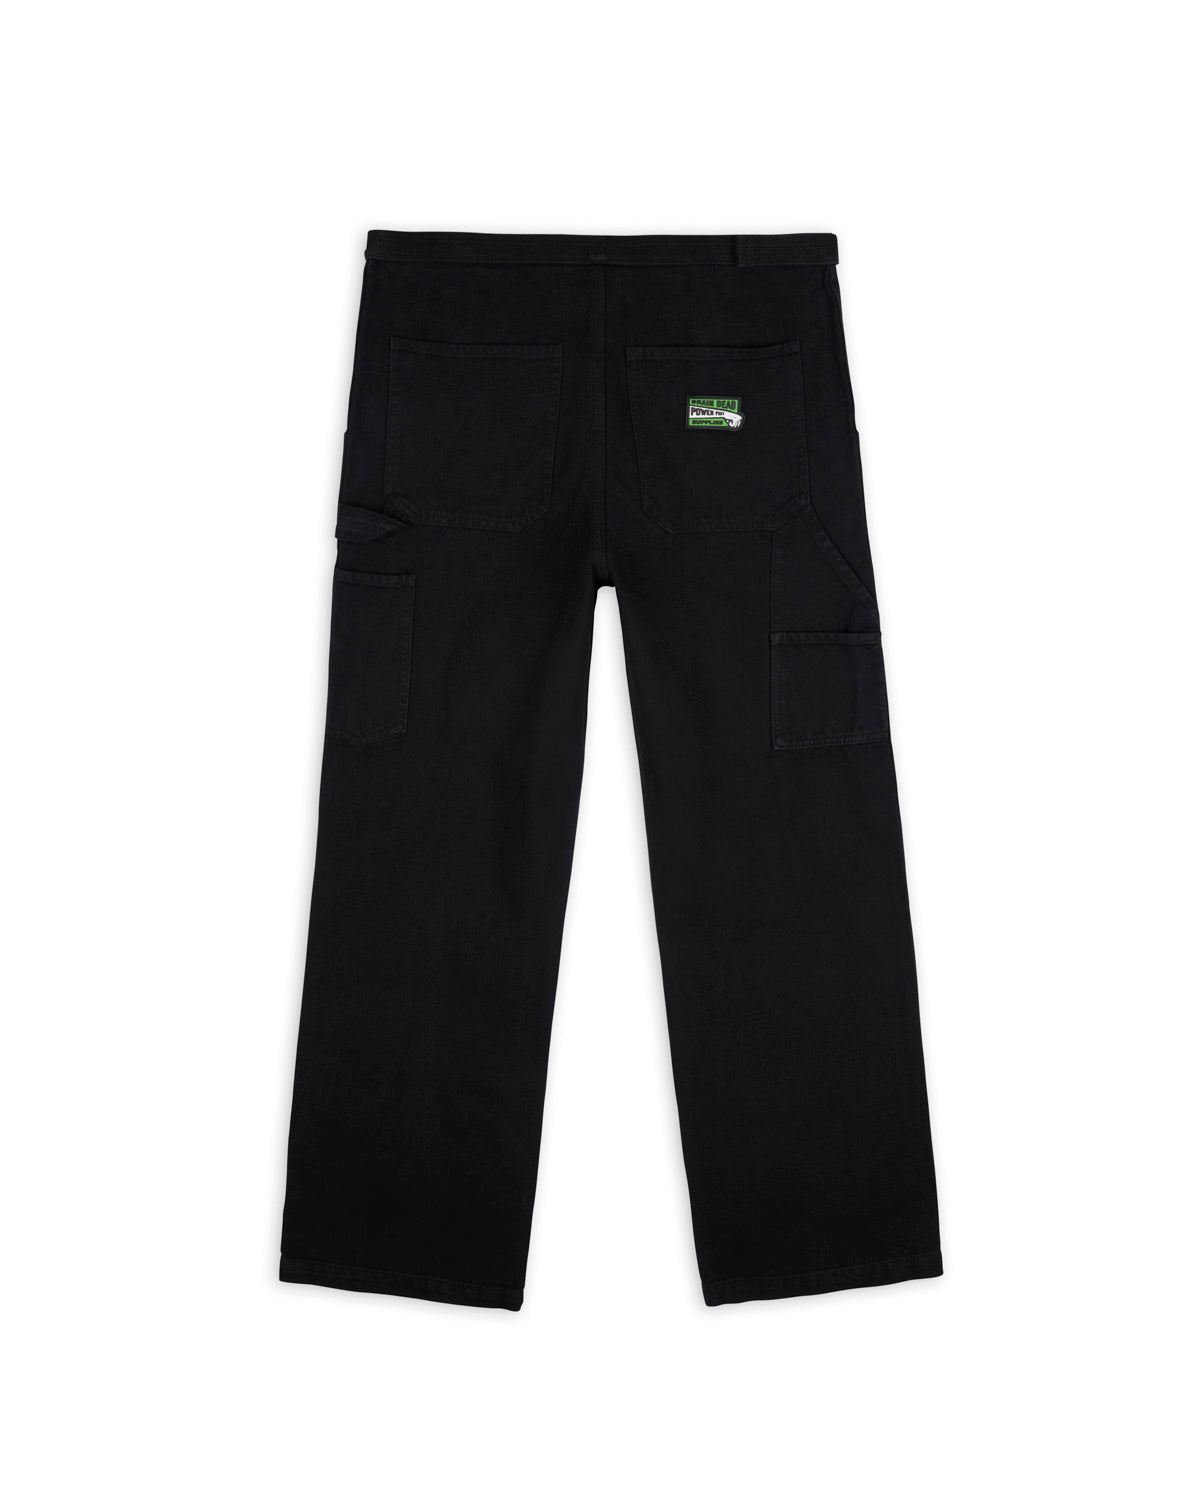 Washed Hard Ware/ Soft Wear Carpenter Pant - Pigment Black 2